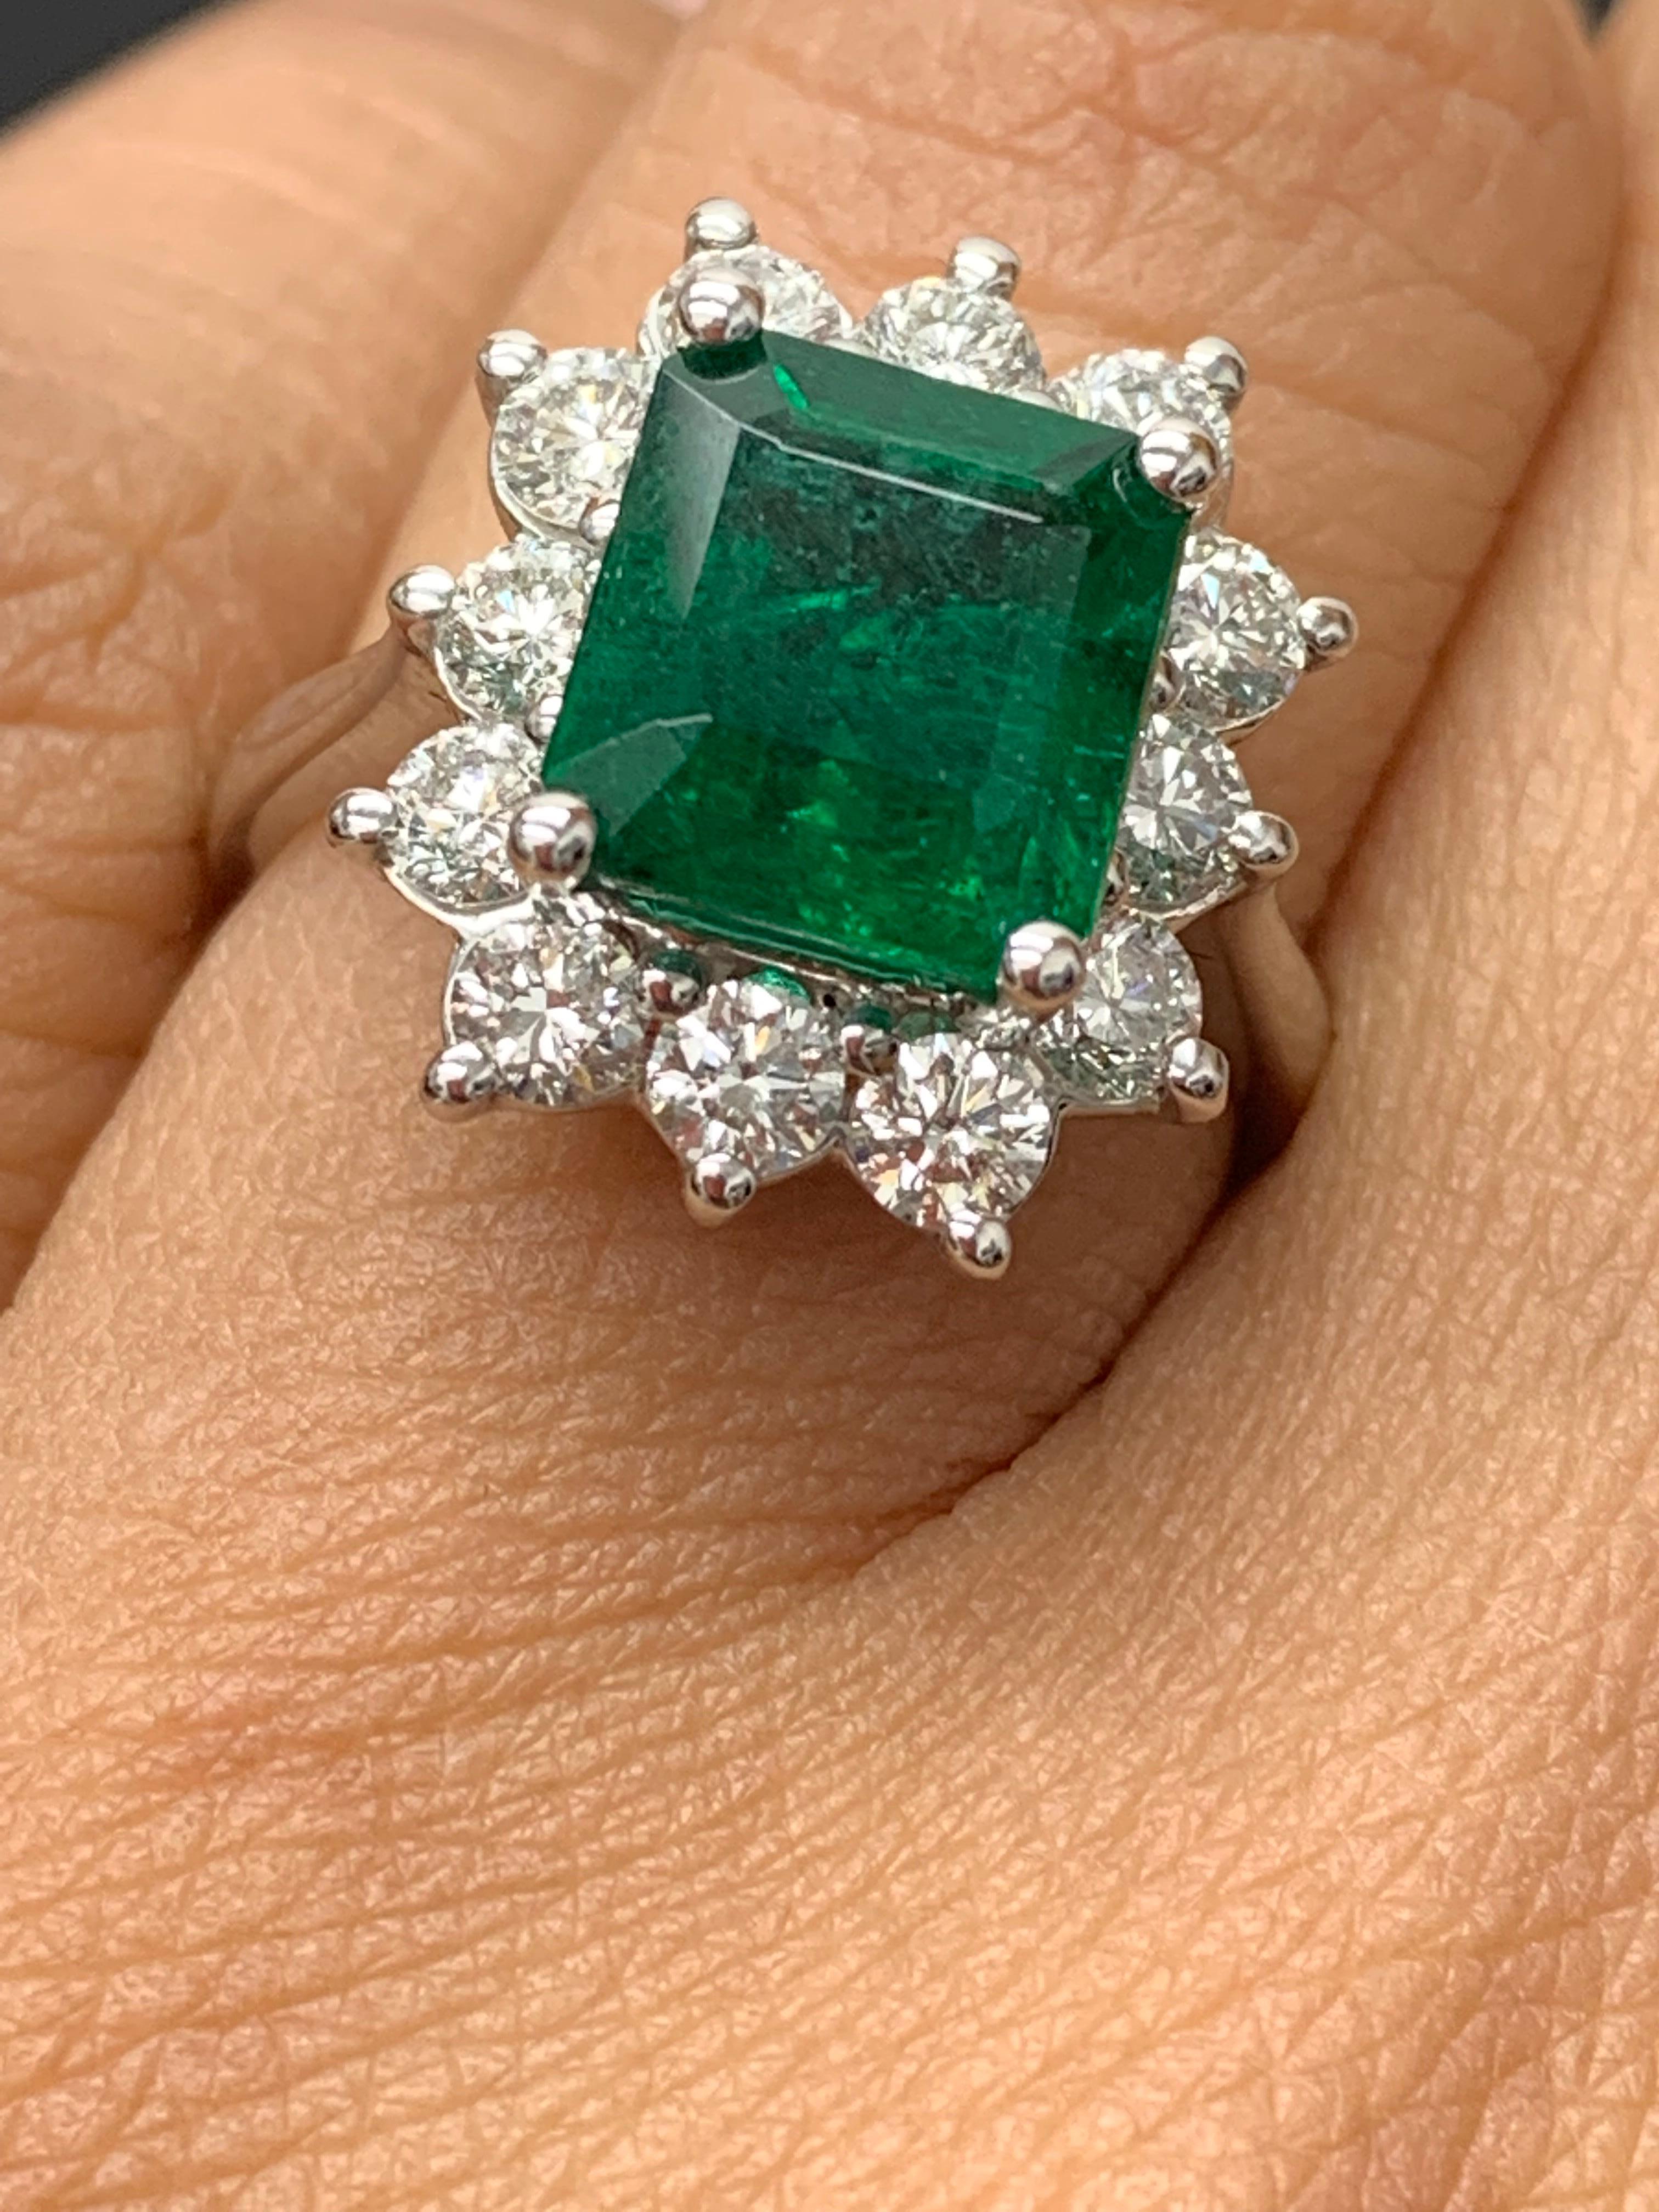 Certified 3.17 Carat Emerald Cut Emerald Diamond Ring in 14K White Gold For Sale 6